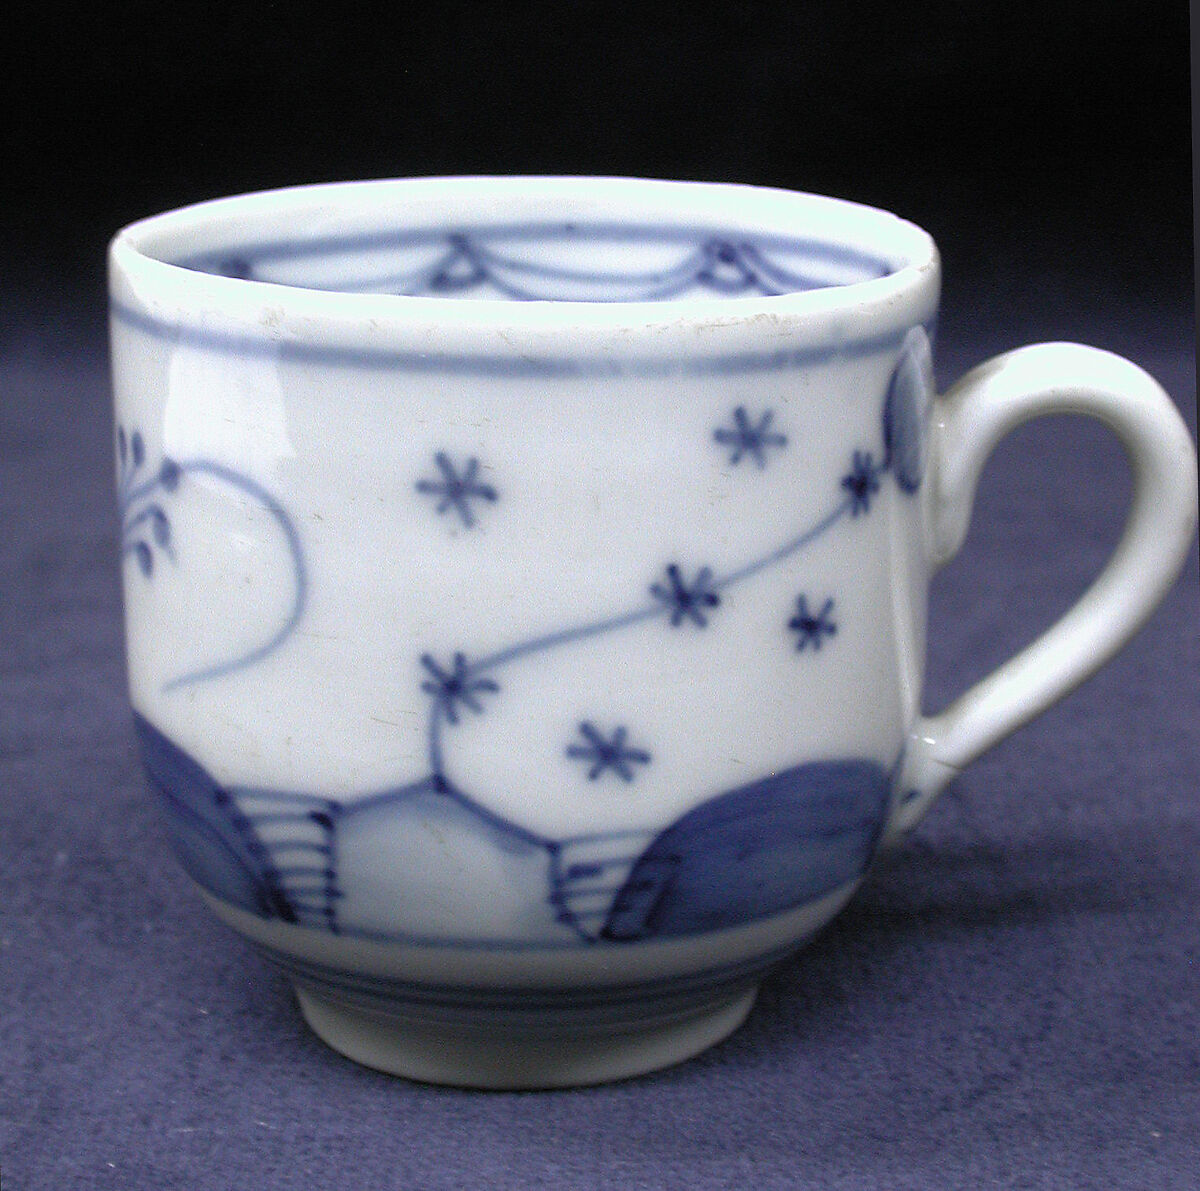 Cup and saucer (assembled), Giesshübel, Hard-paste porcelain, Bohemian 